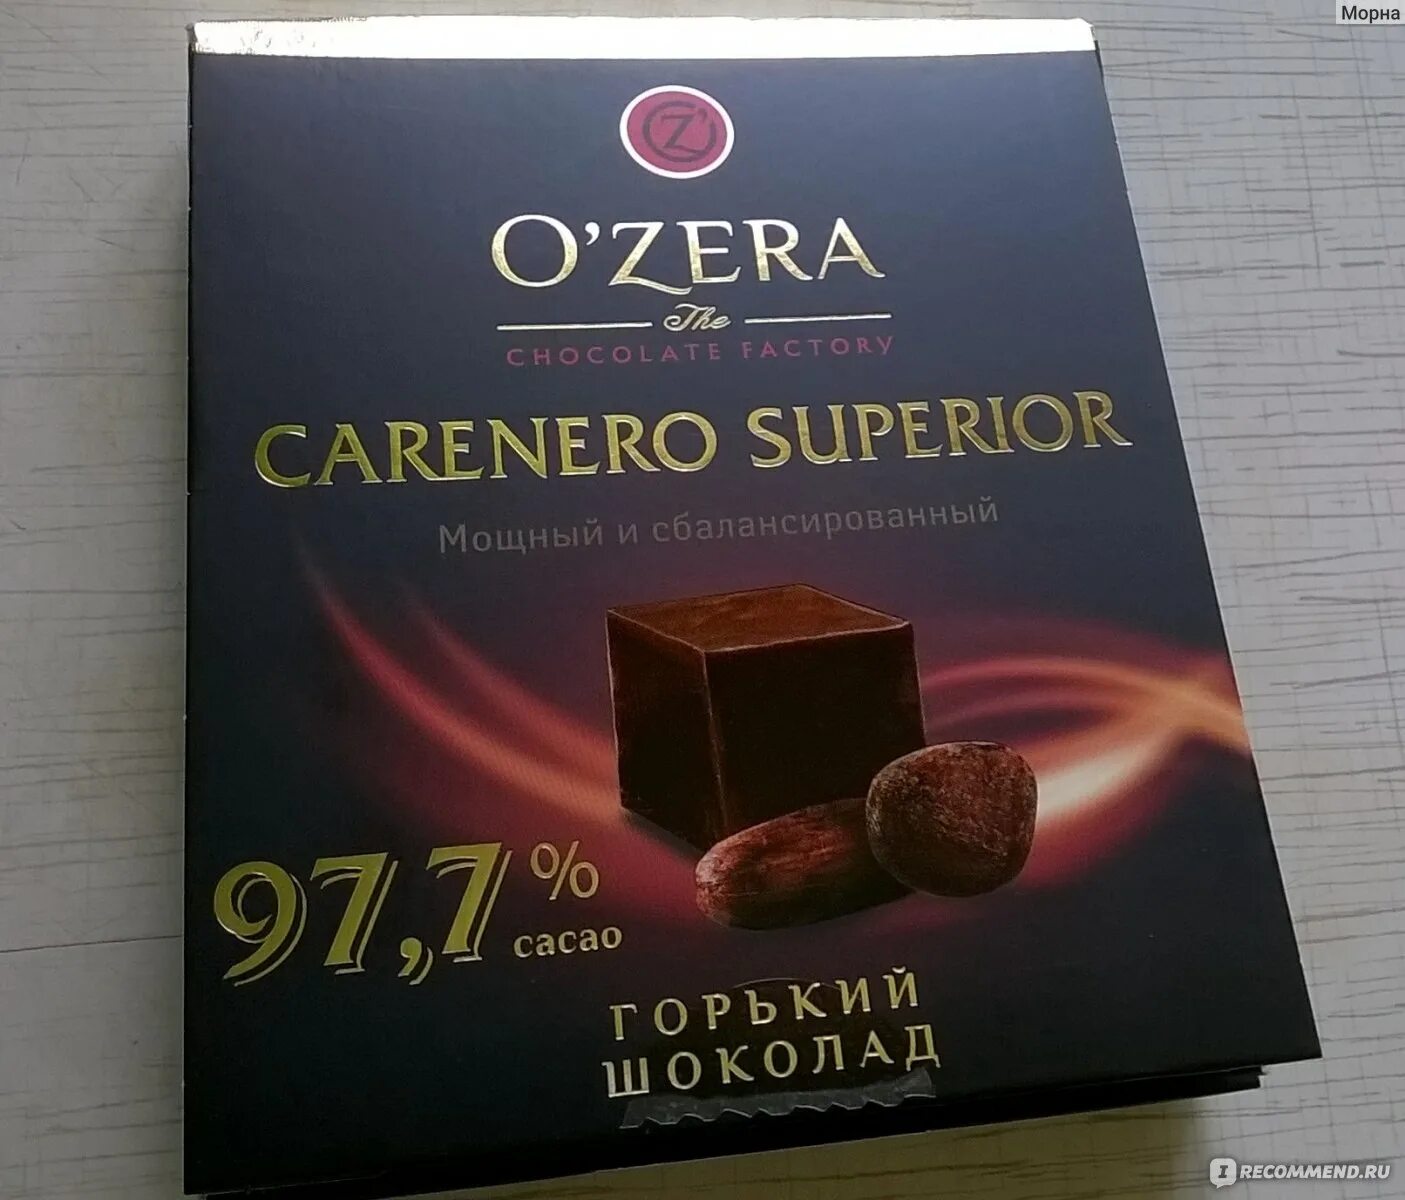 Zera шоколад. Шоколад o'Zera Carenero Superior. Ozero cornerio Superior Шокодадка. Шоколад «o'Zera» Carenero Superio Горький, 90 г. Ozera шоколад the Chocolate.